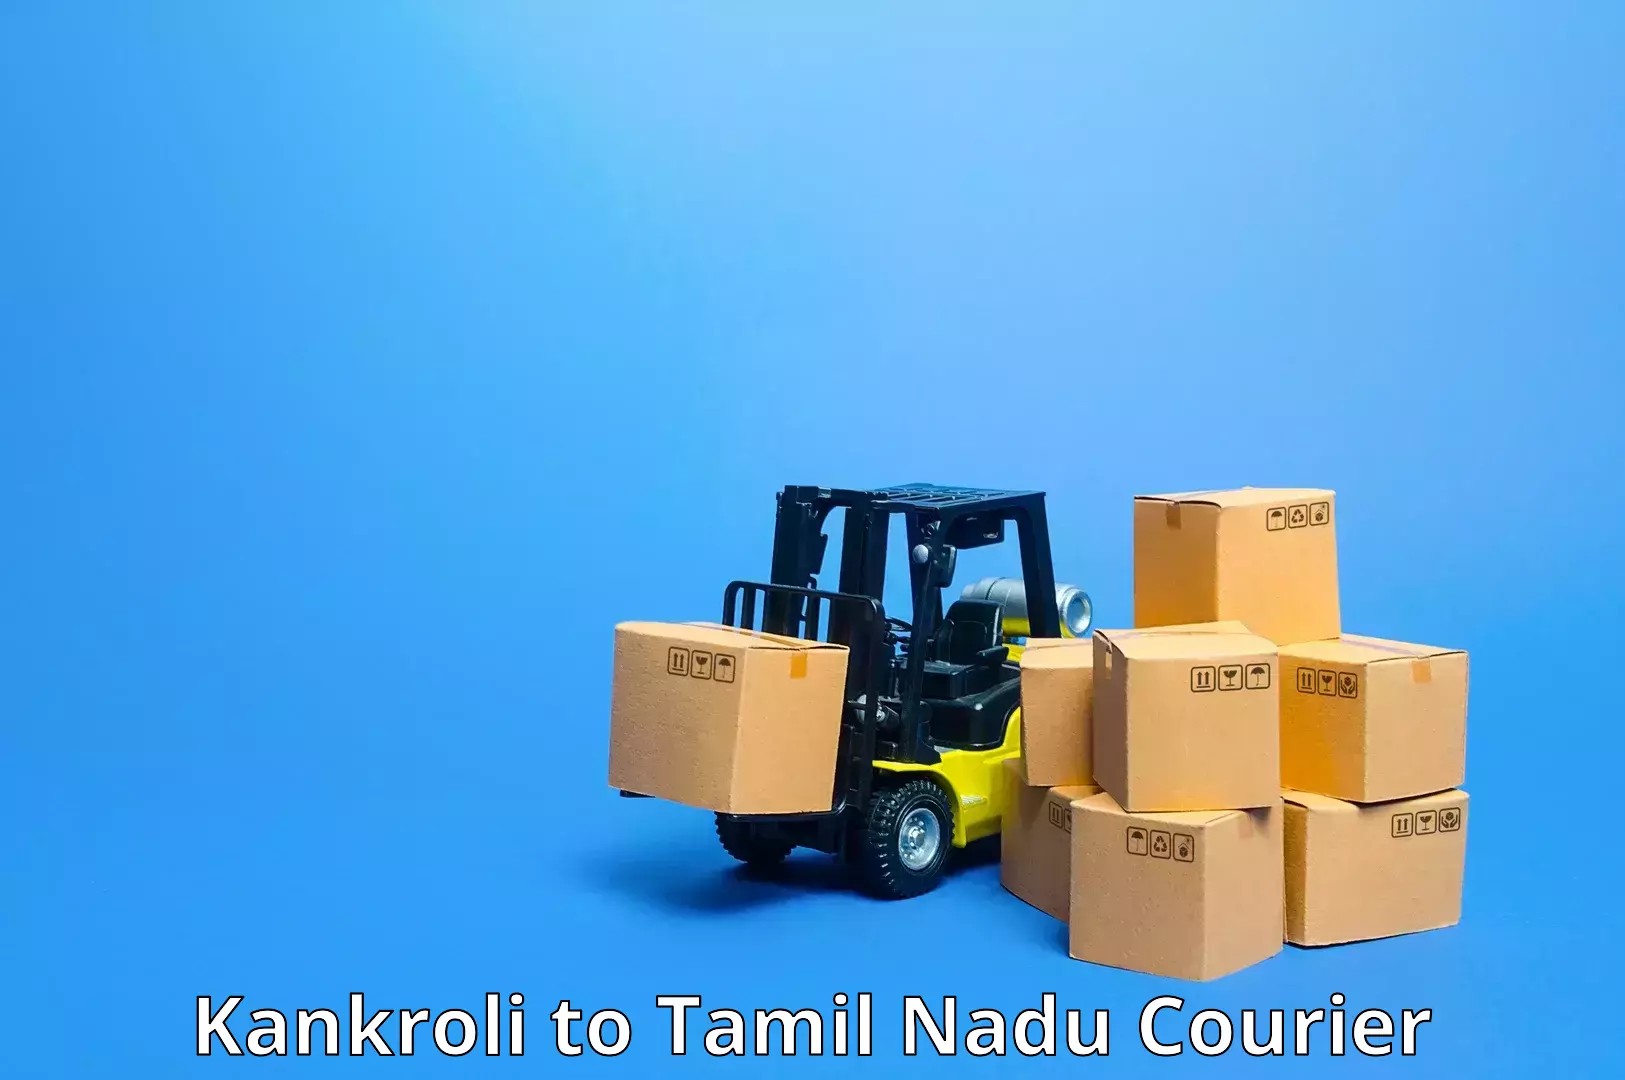 Express courier facilities Kankroli to Vilathikulam